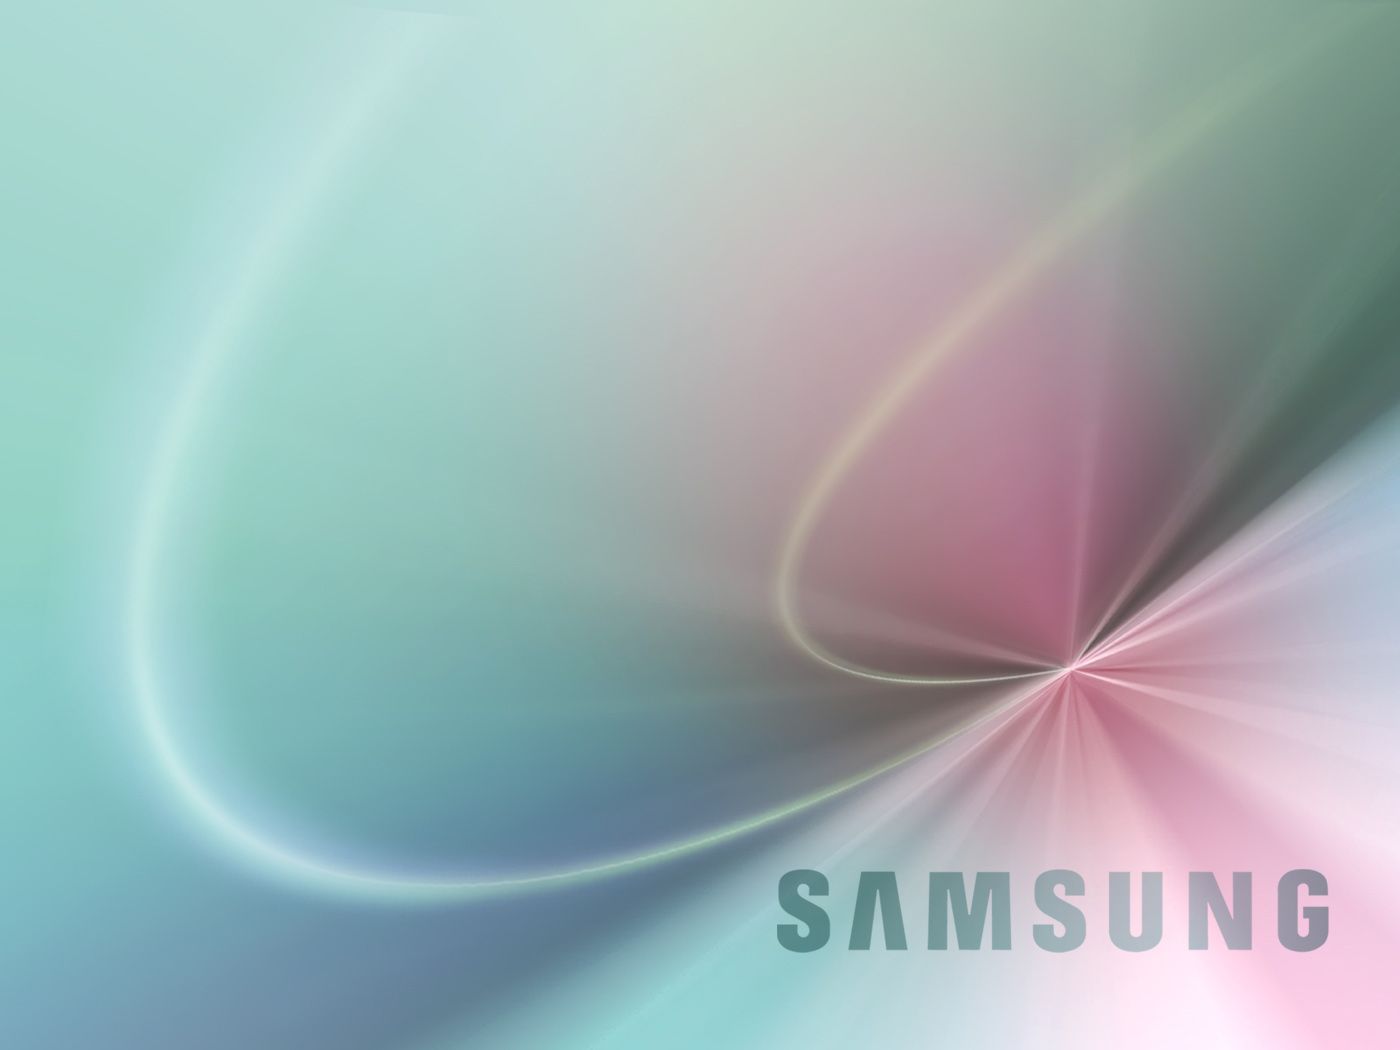 Samsung Wallpaper Hd Fullscreen